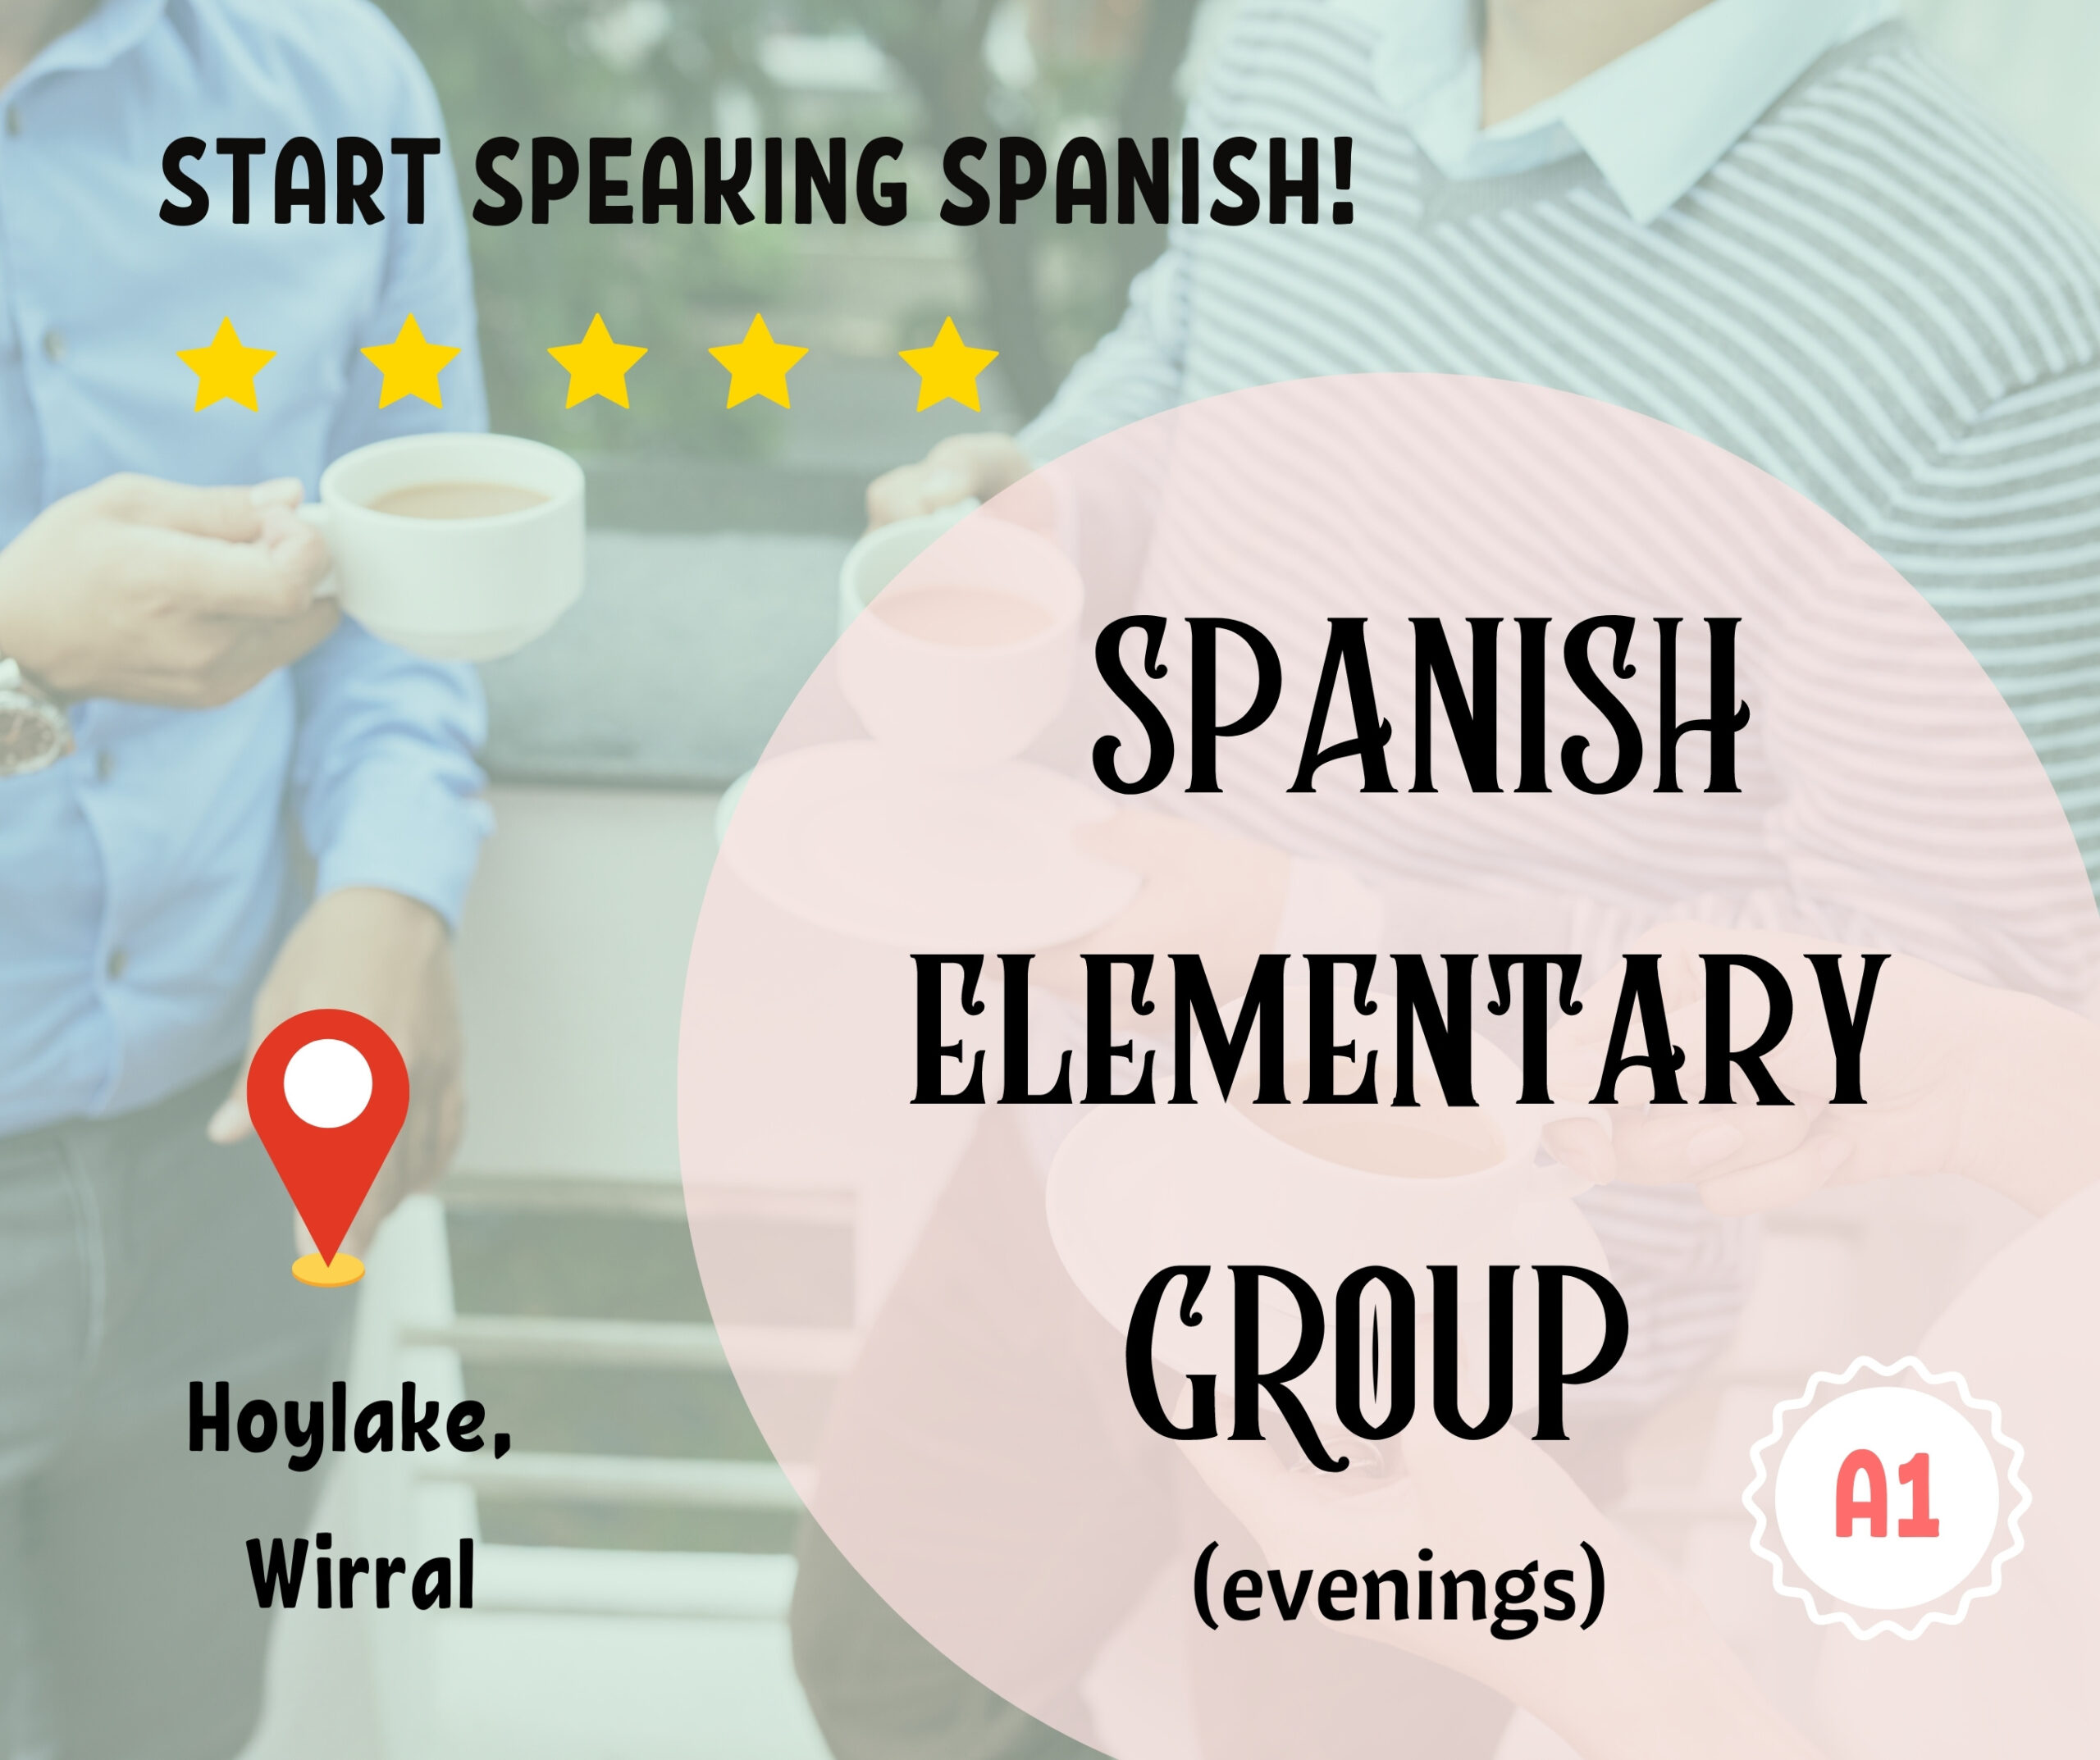 Spanish Elementary Group (Evenings)